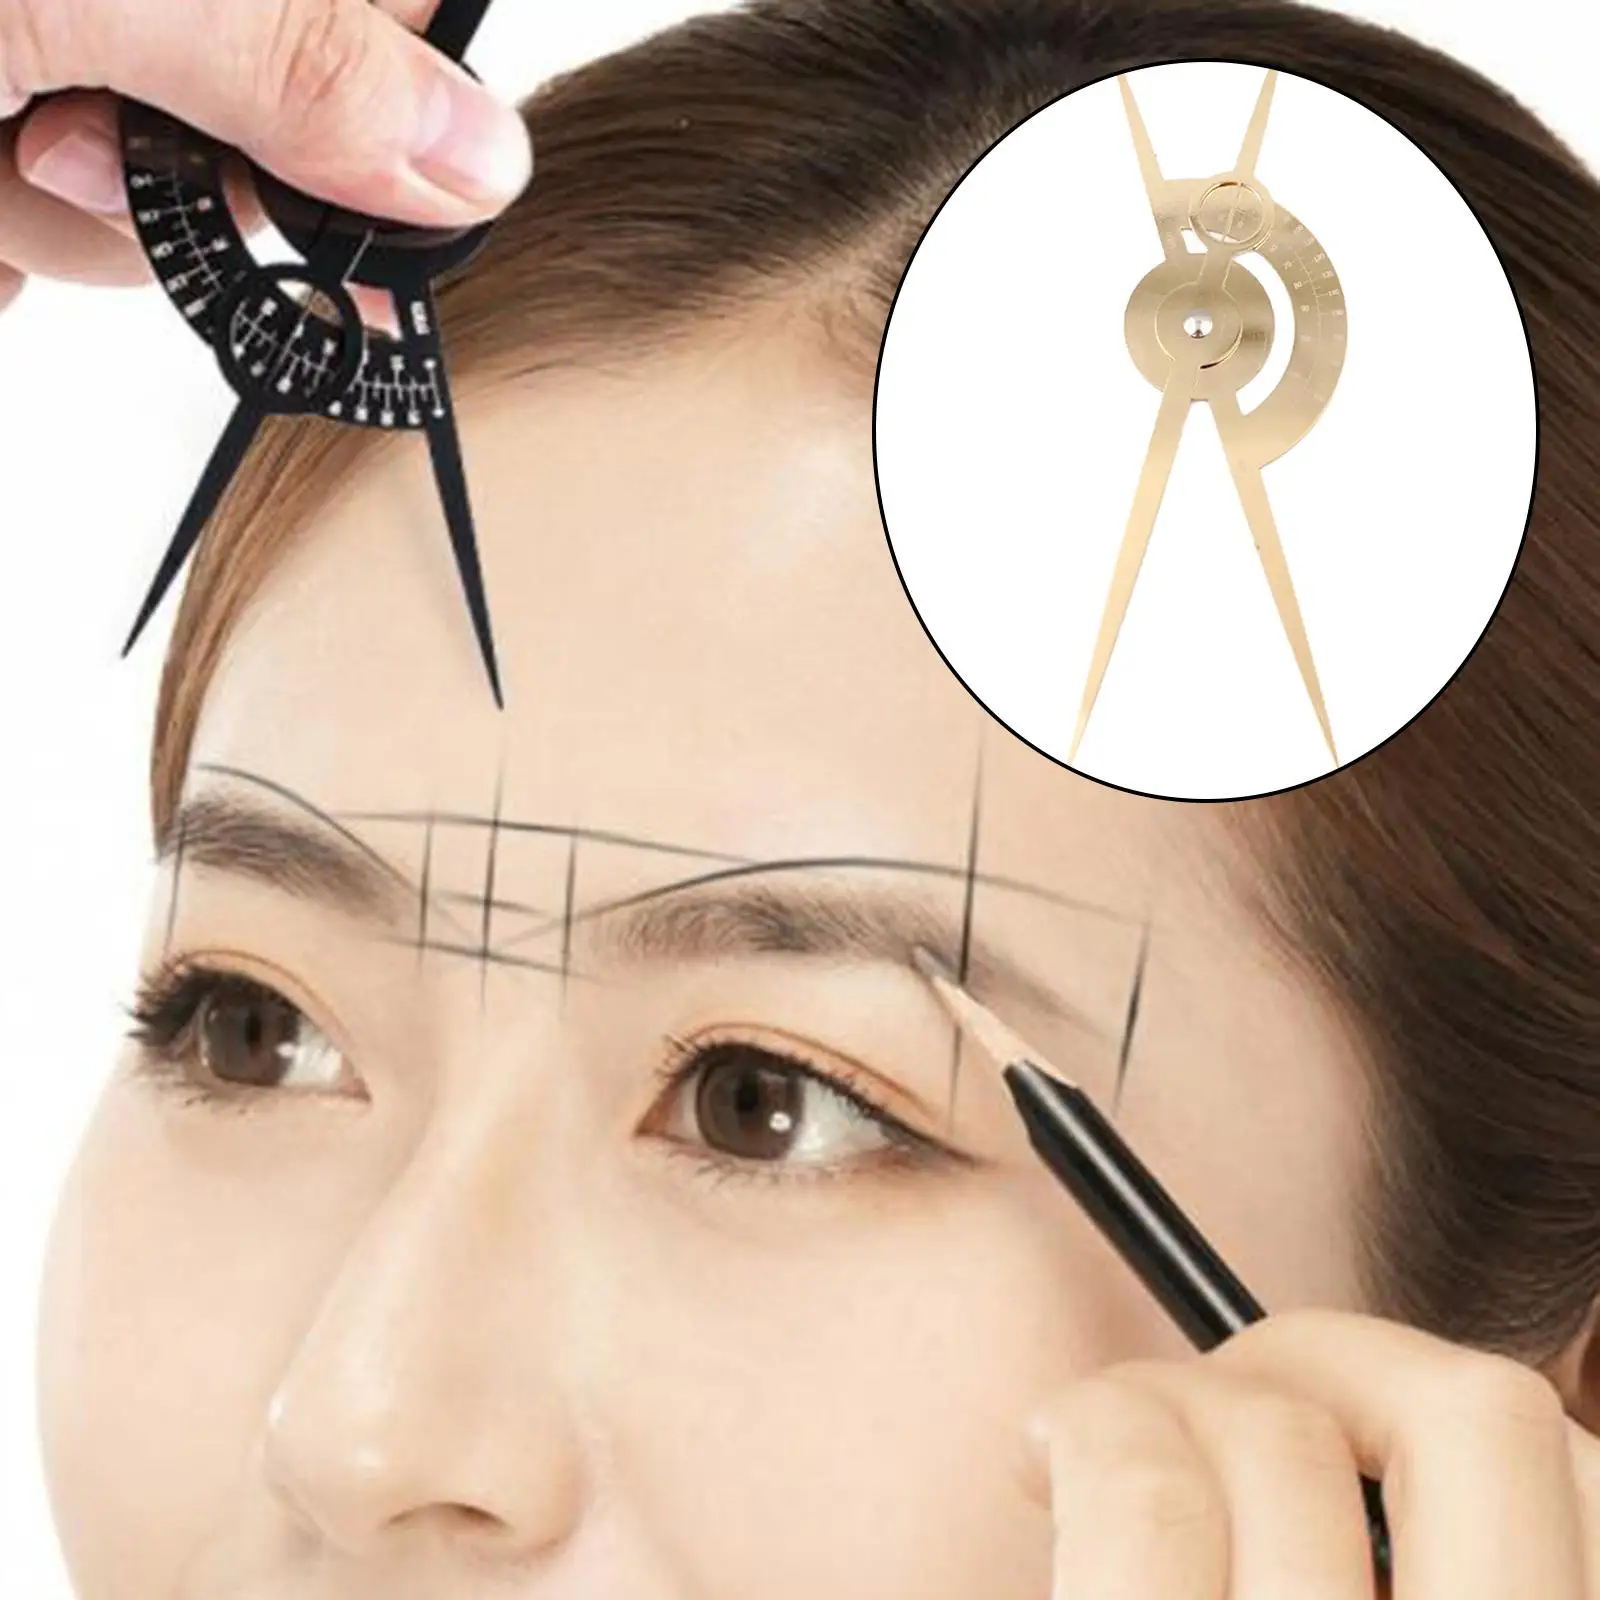  Ratio Caliper Professional Eyebrow Removable Reusable Ruler  Positioning for Makeup DIY Shaping Tool